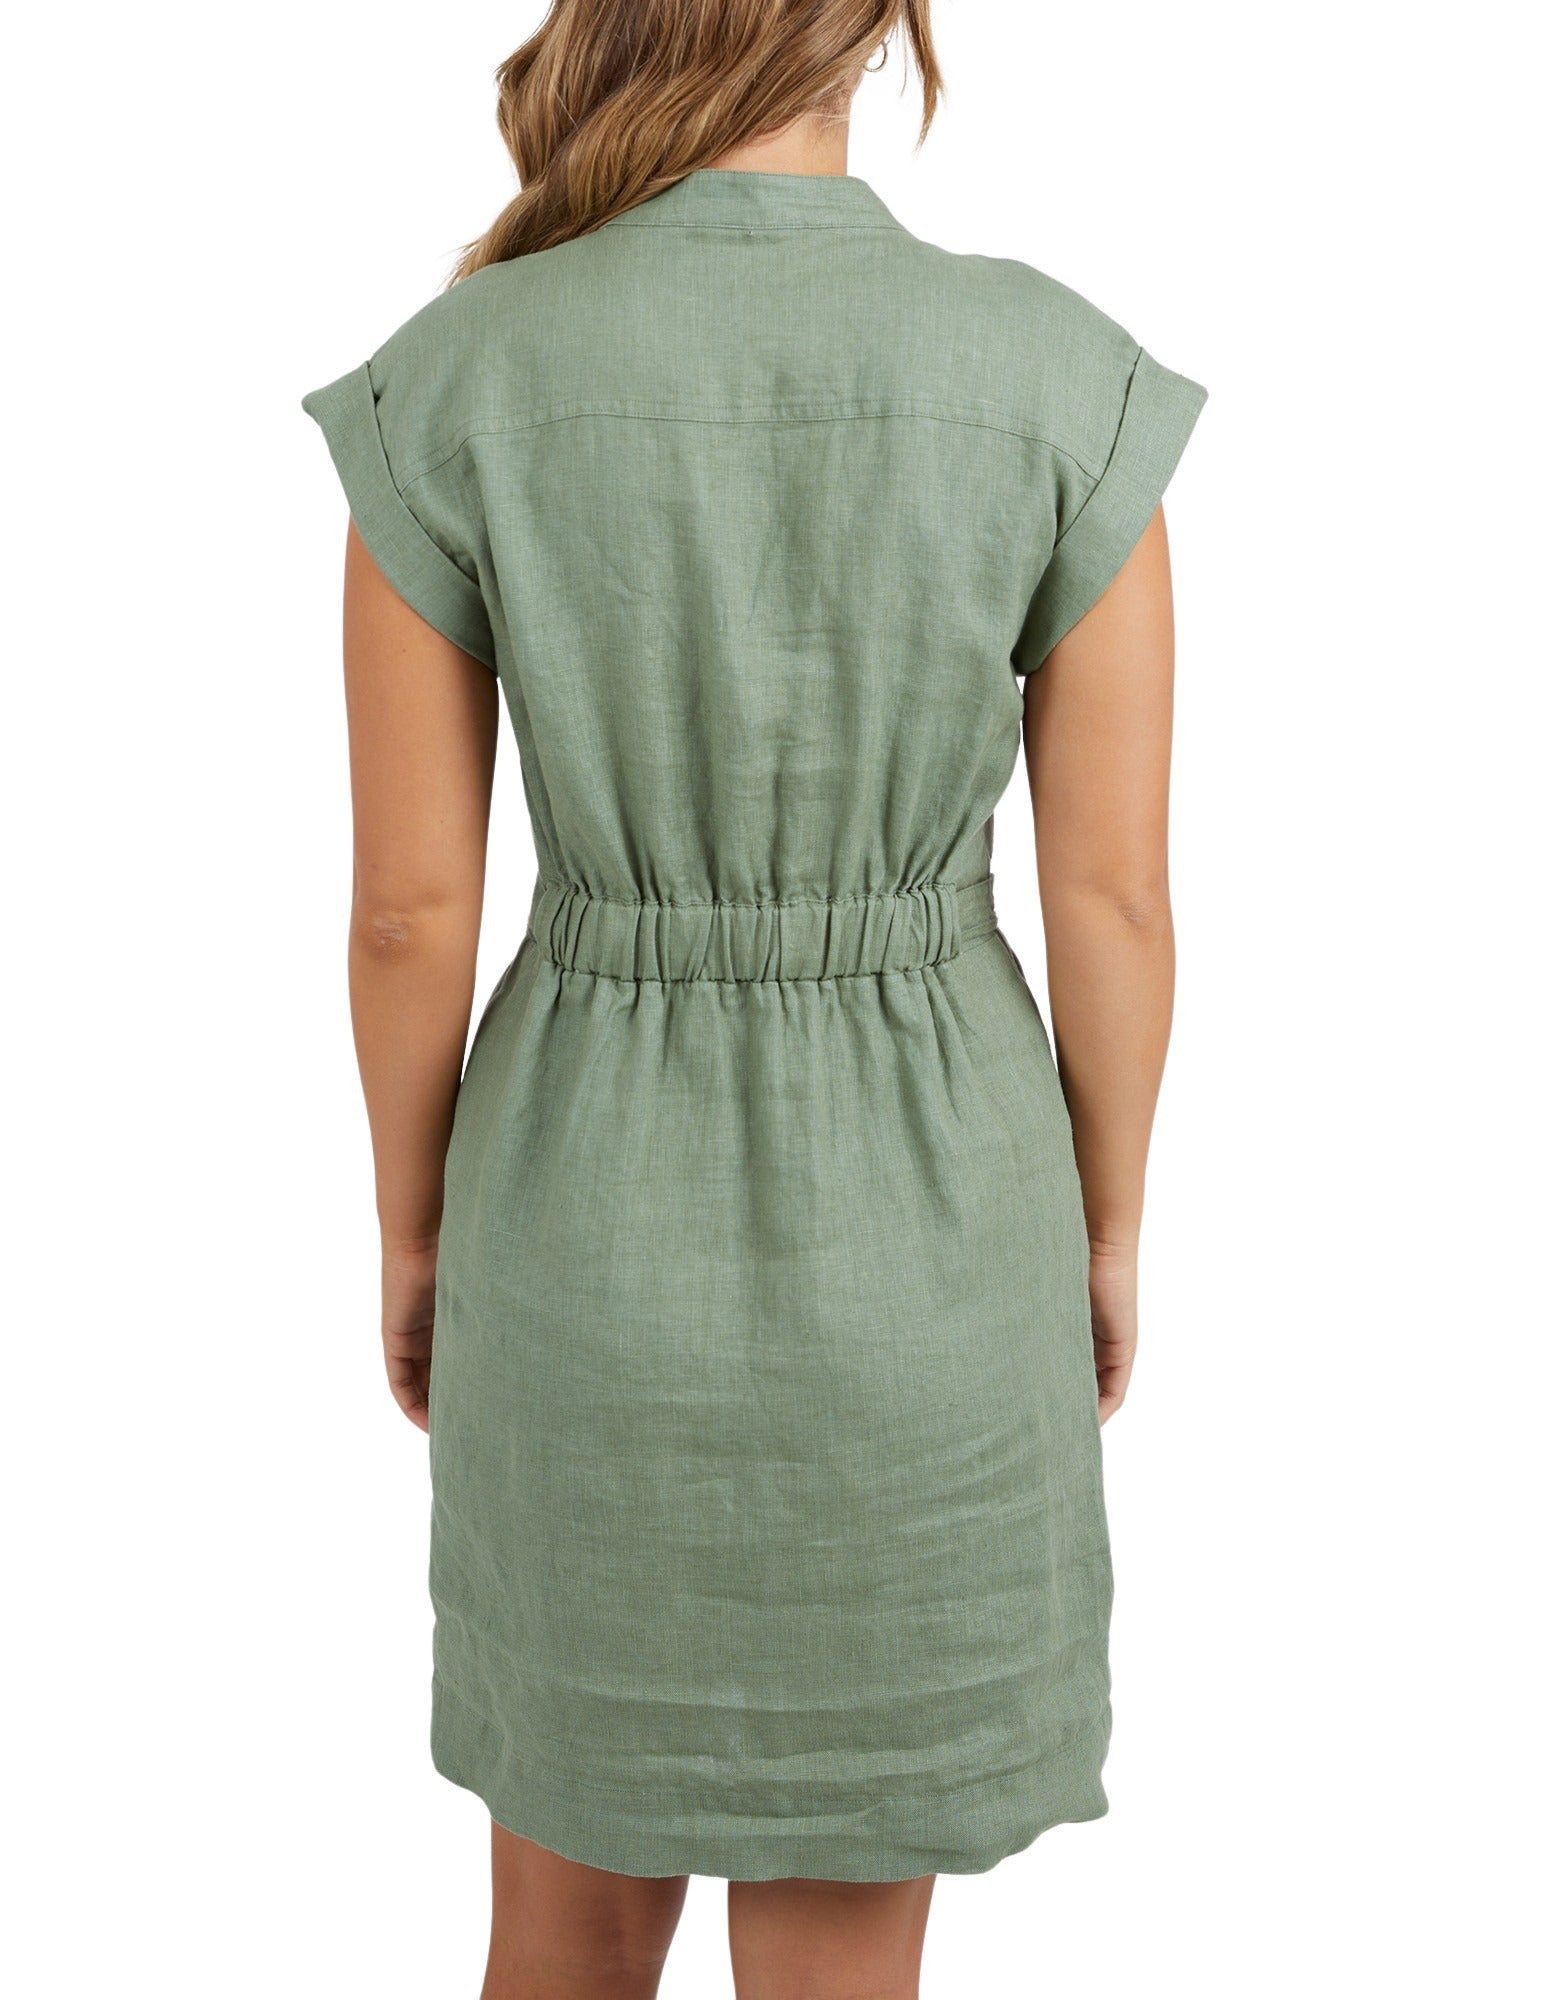 Foxwood - Harlow Dress - Khaki last size 16!